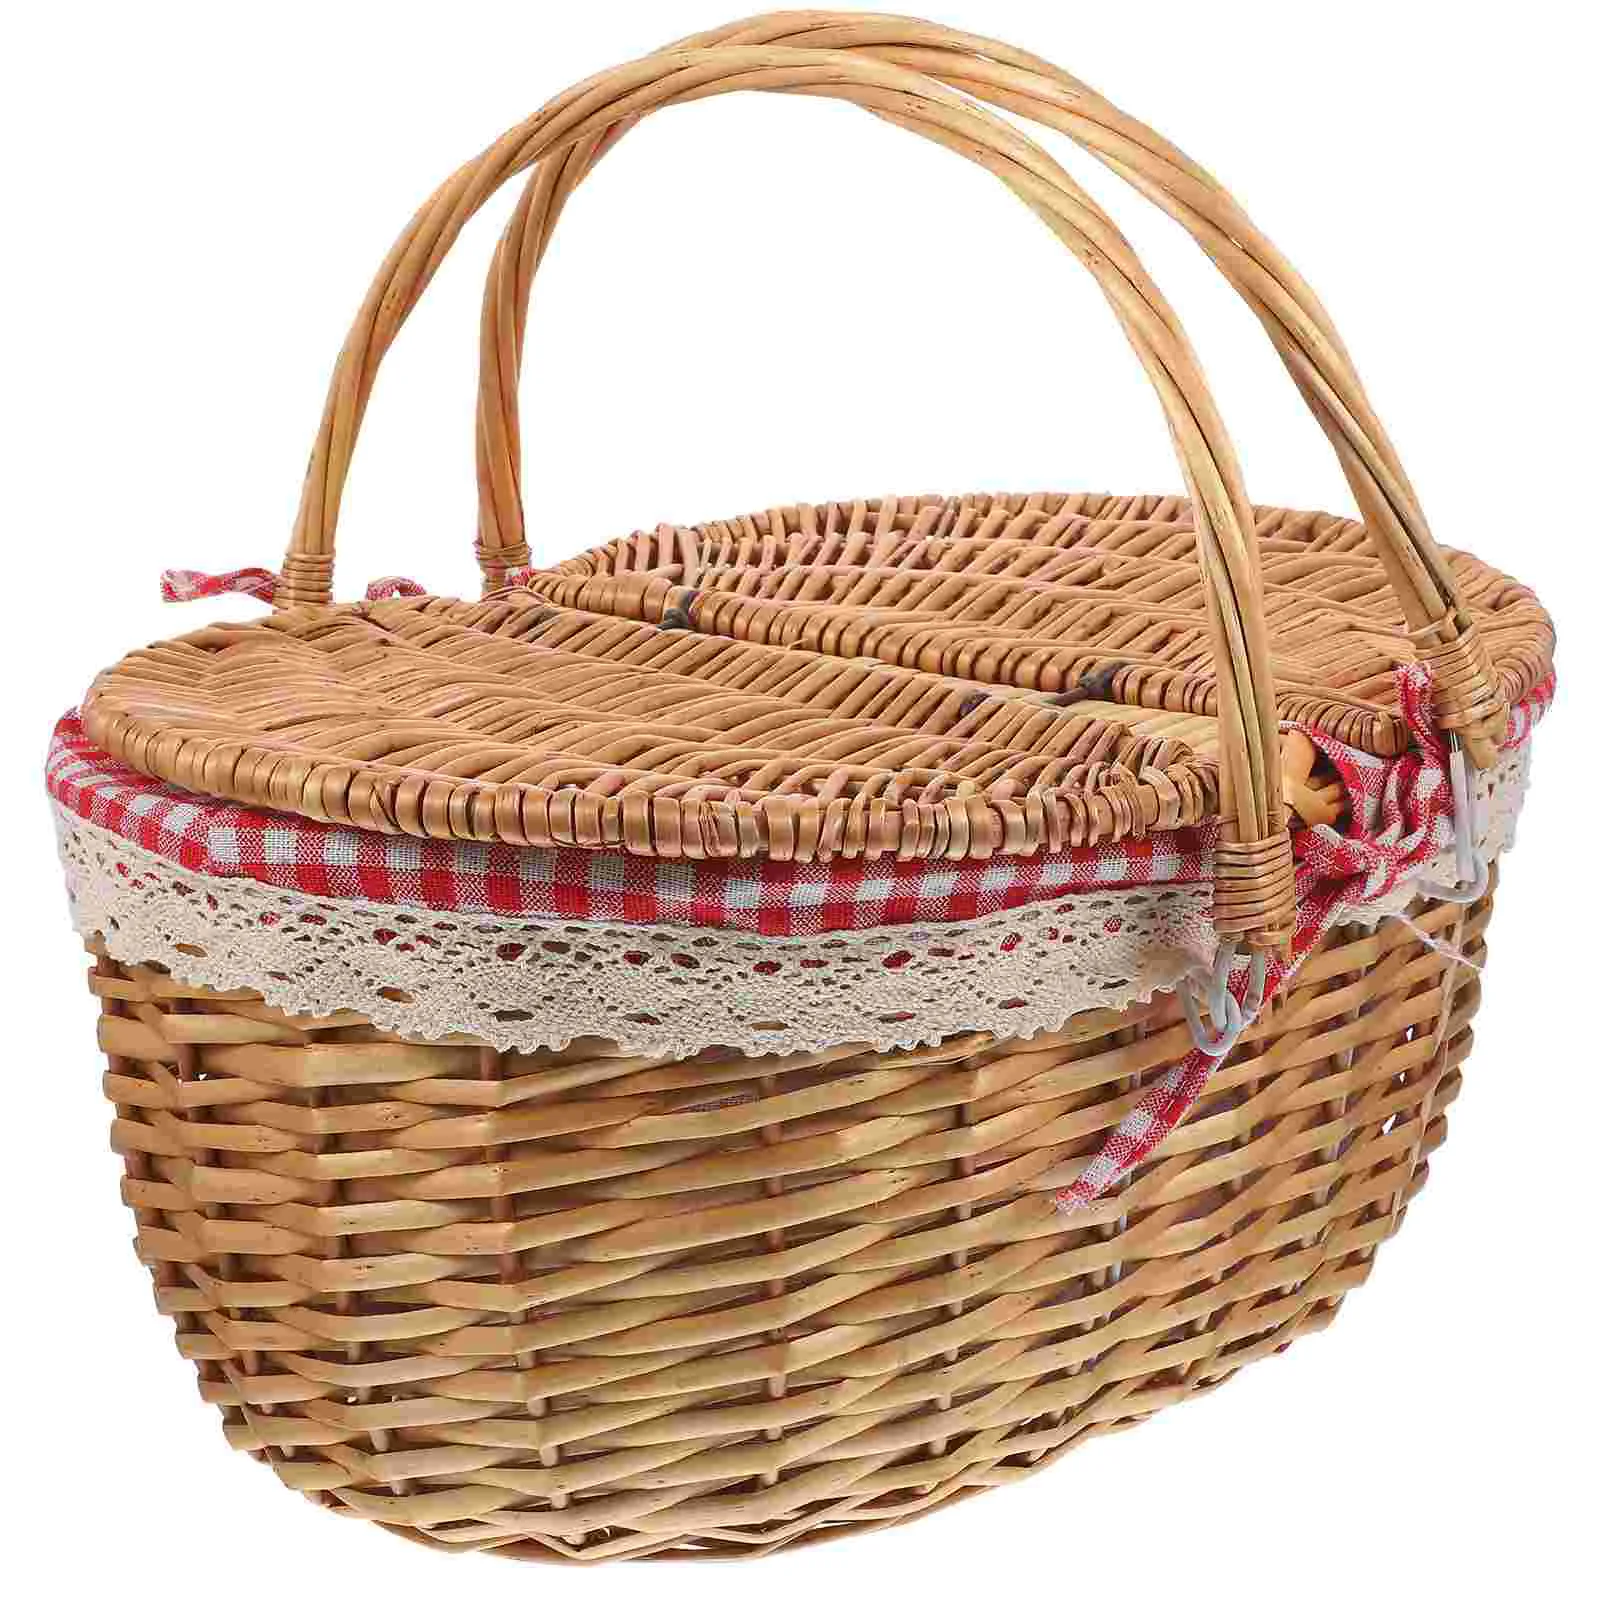 

Jojofuny Small Basket Gift Baskets Empty Farmhouse Woven Bread Basket Seagrass Wicker Picnic Basket Lid Rattan Storage